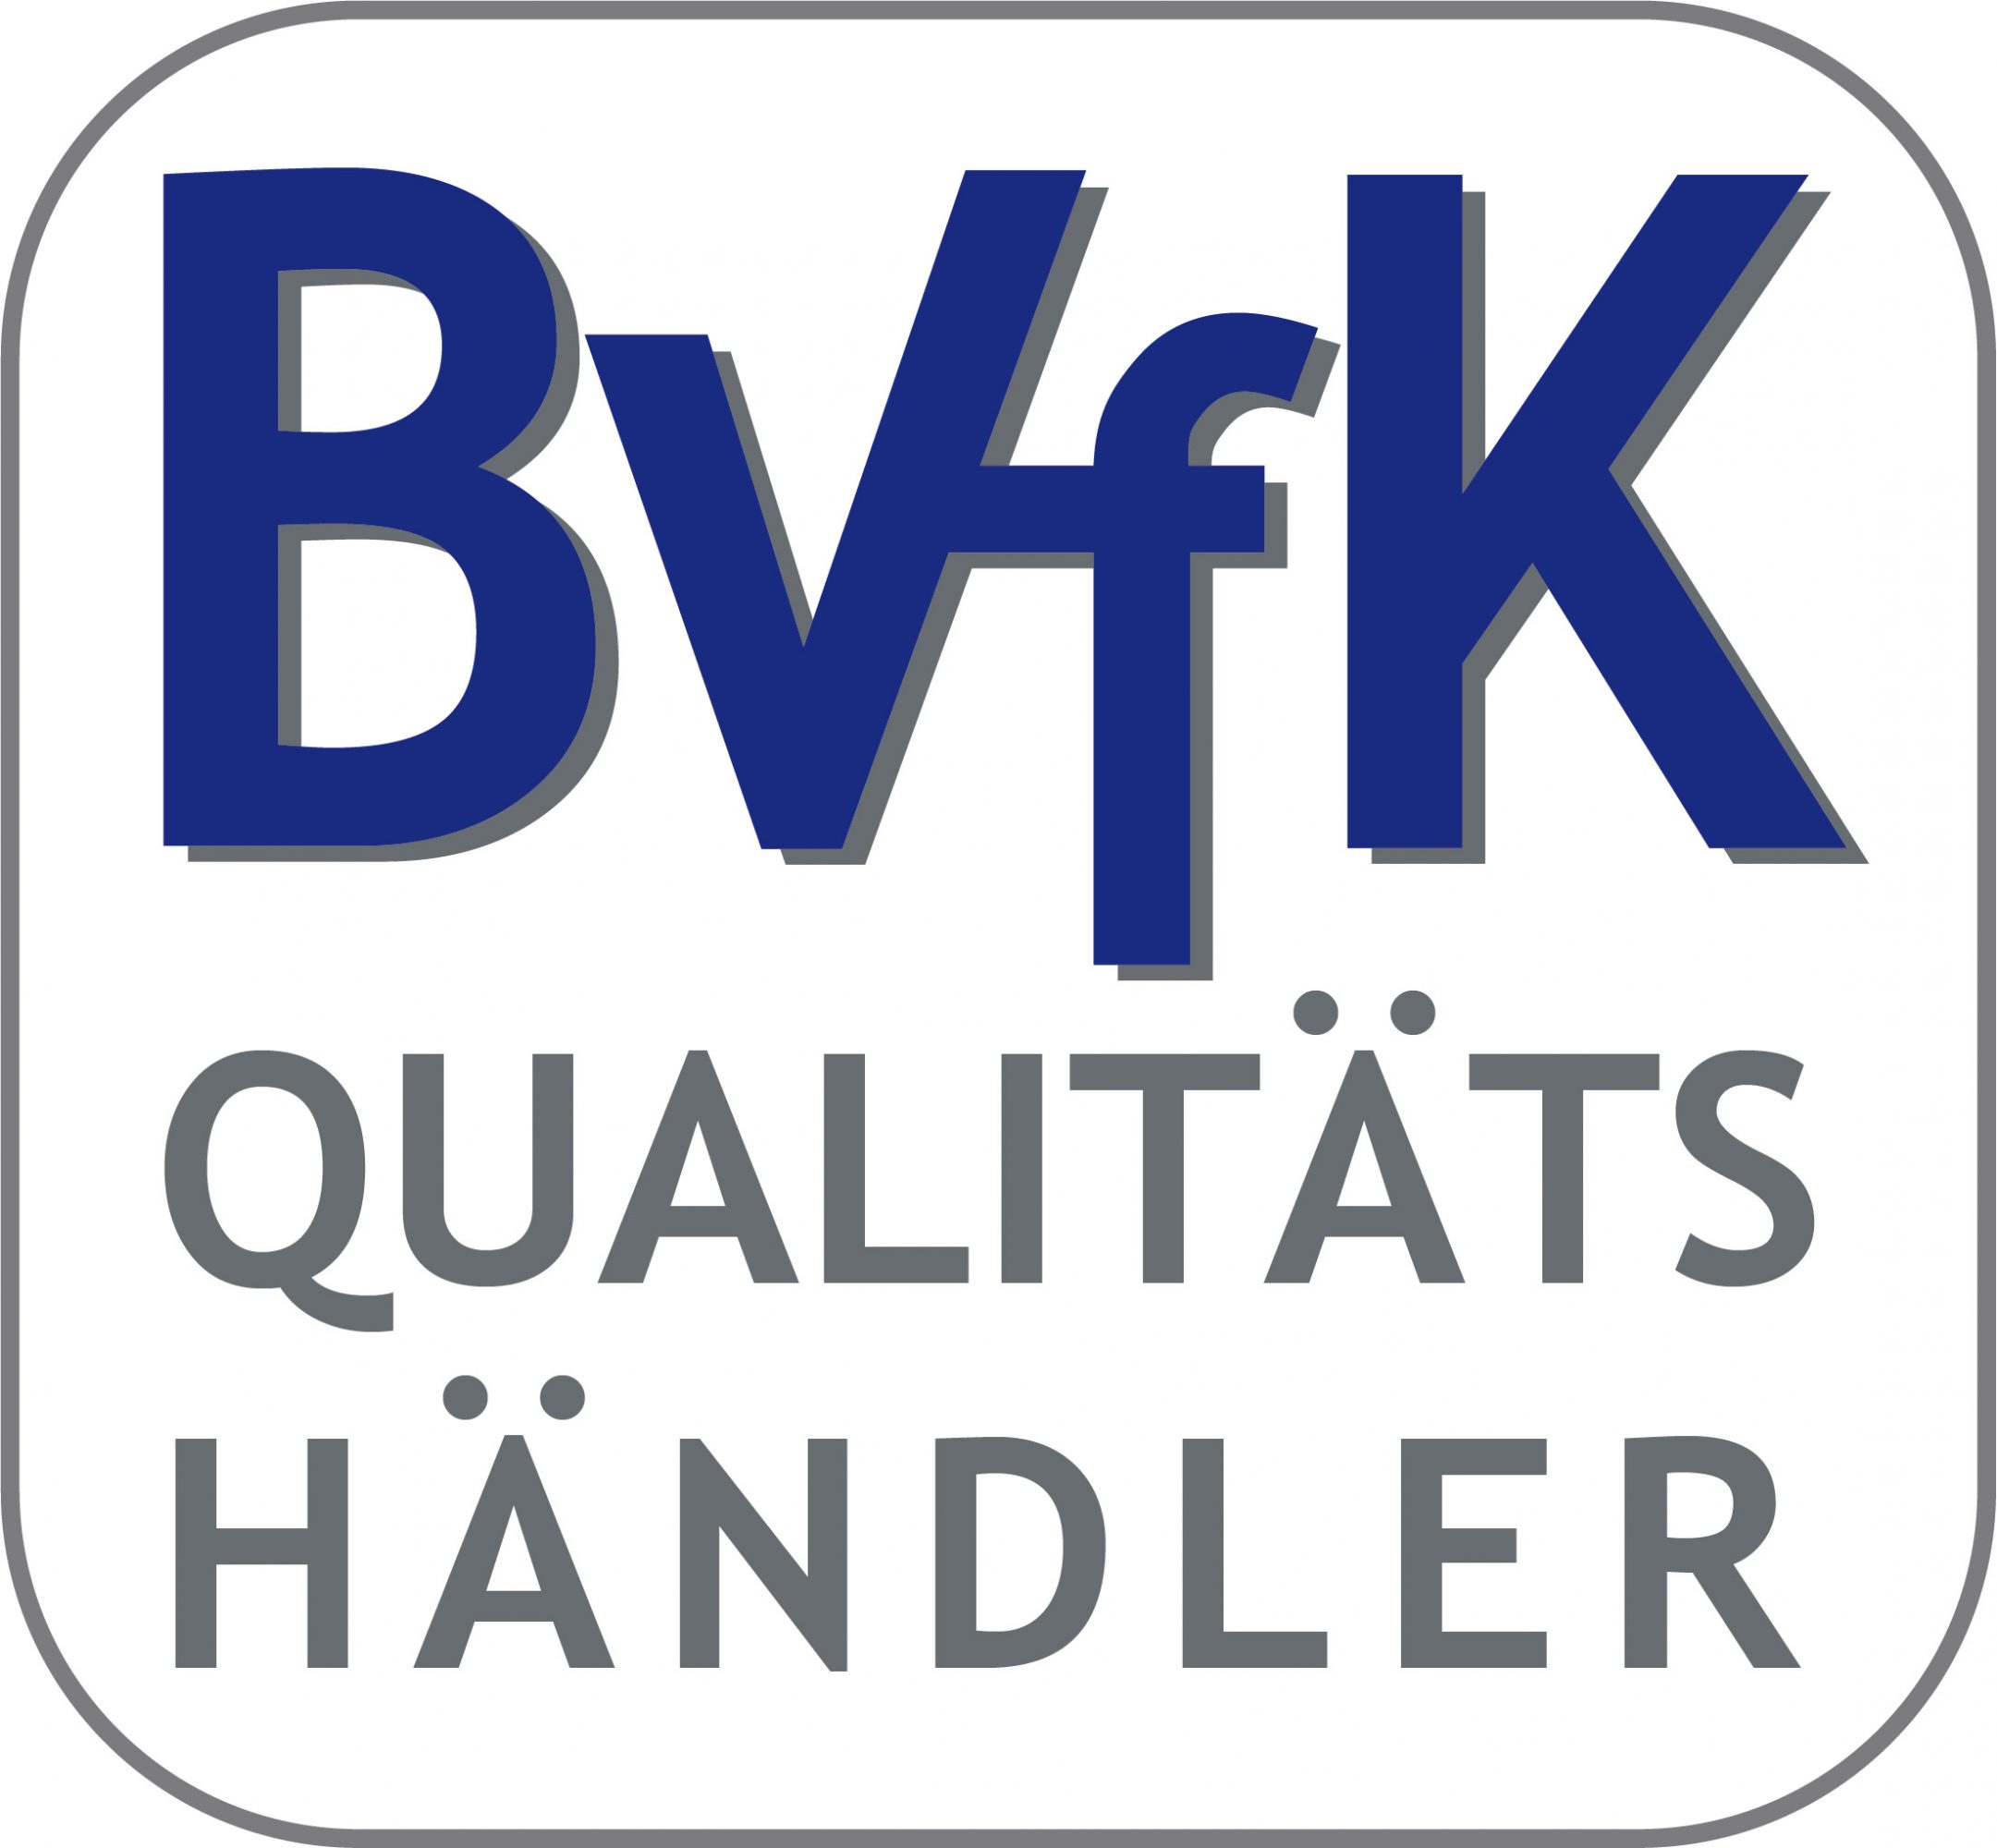 BVfK-Qualitätshändler-2020-c